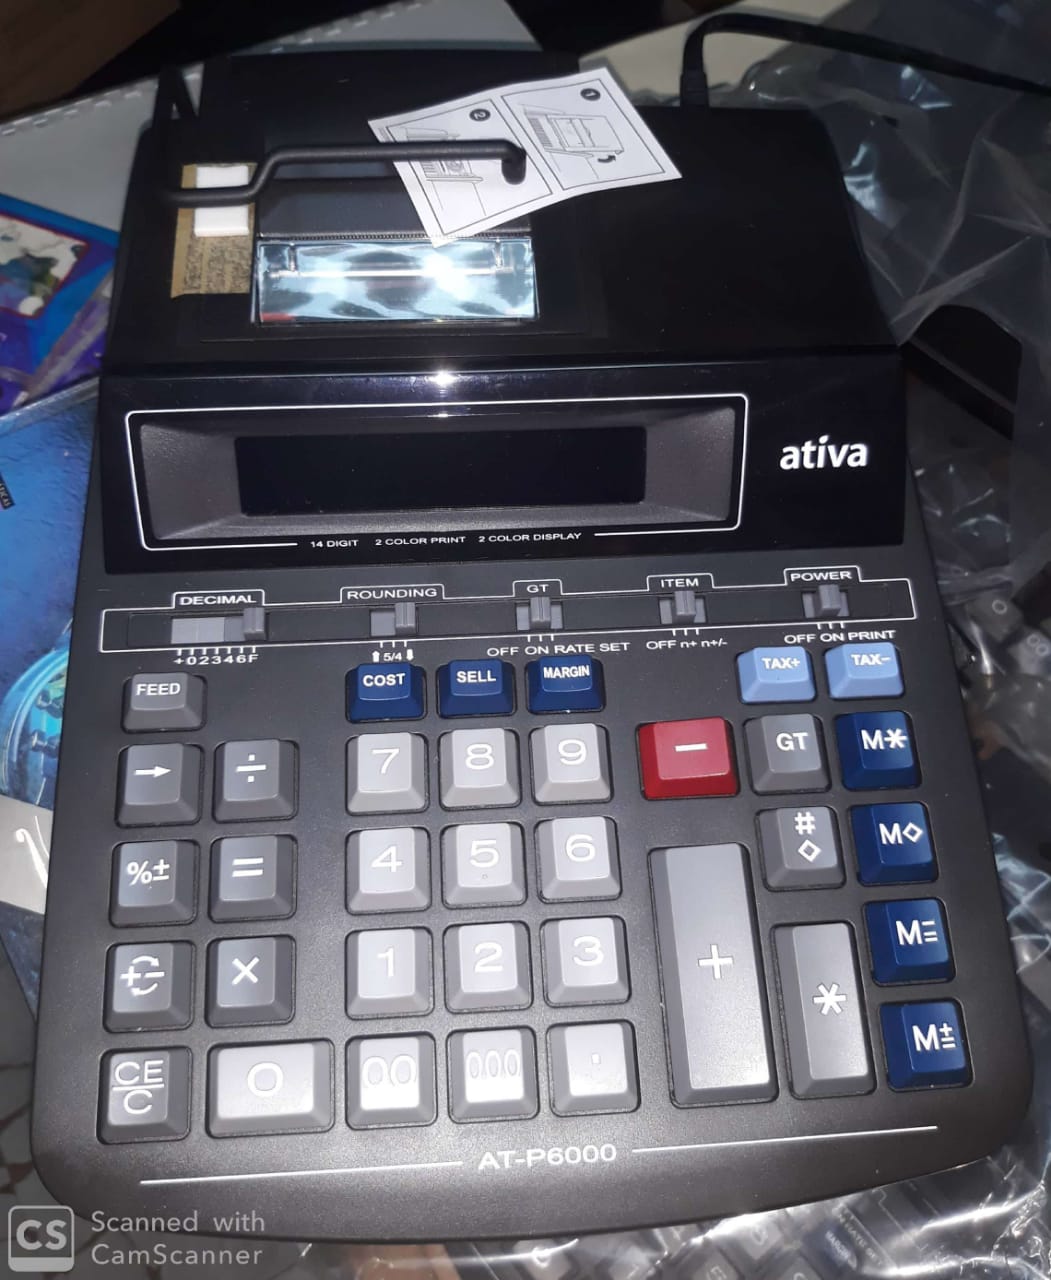 Calculadora de Escritorio con Printeado
Ativa AT-P6000. Totalmente Nueva
